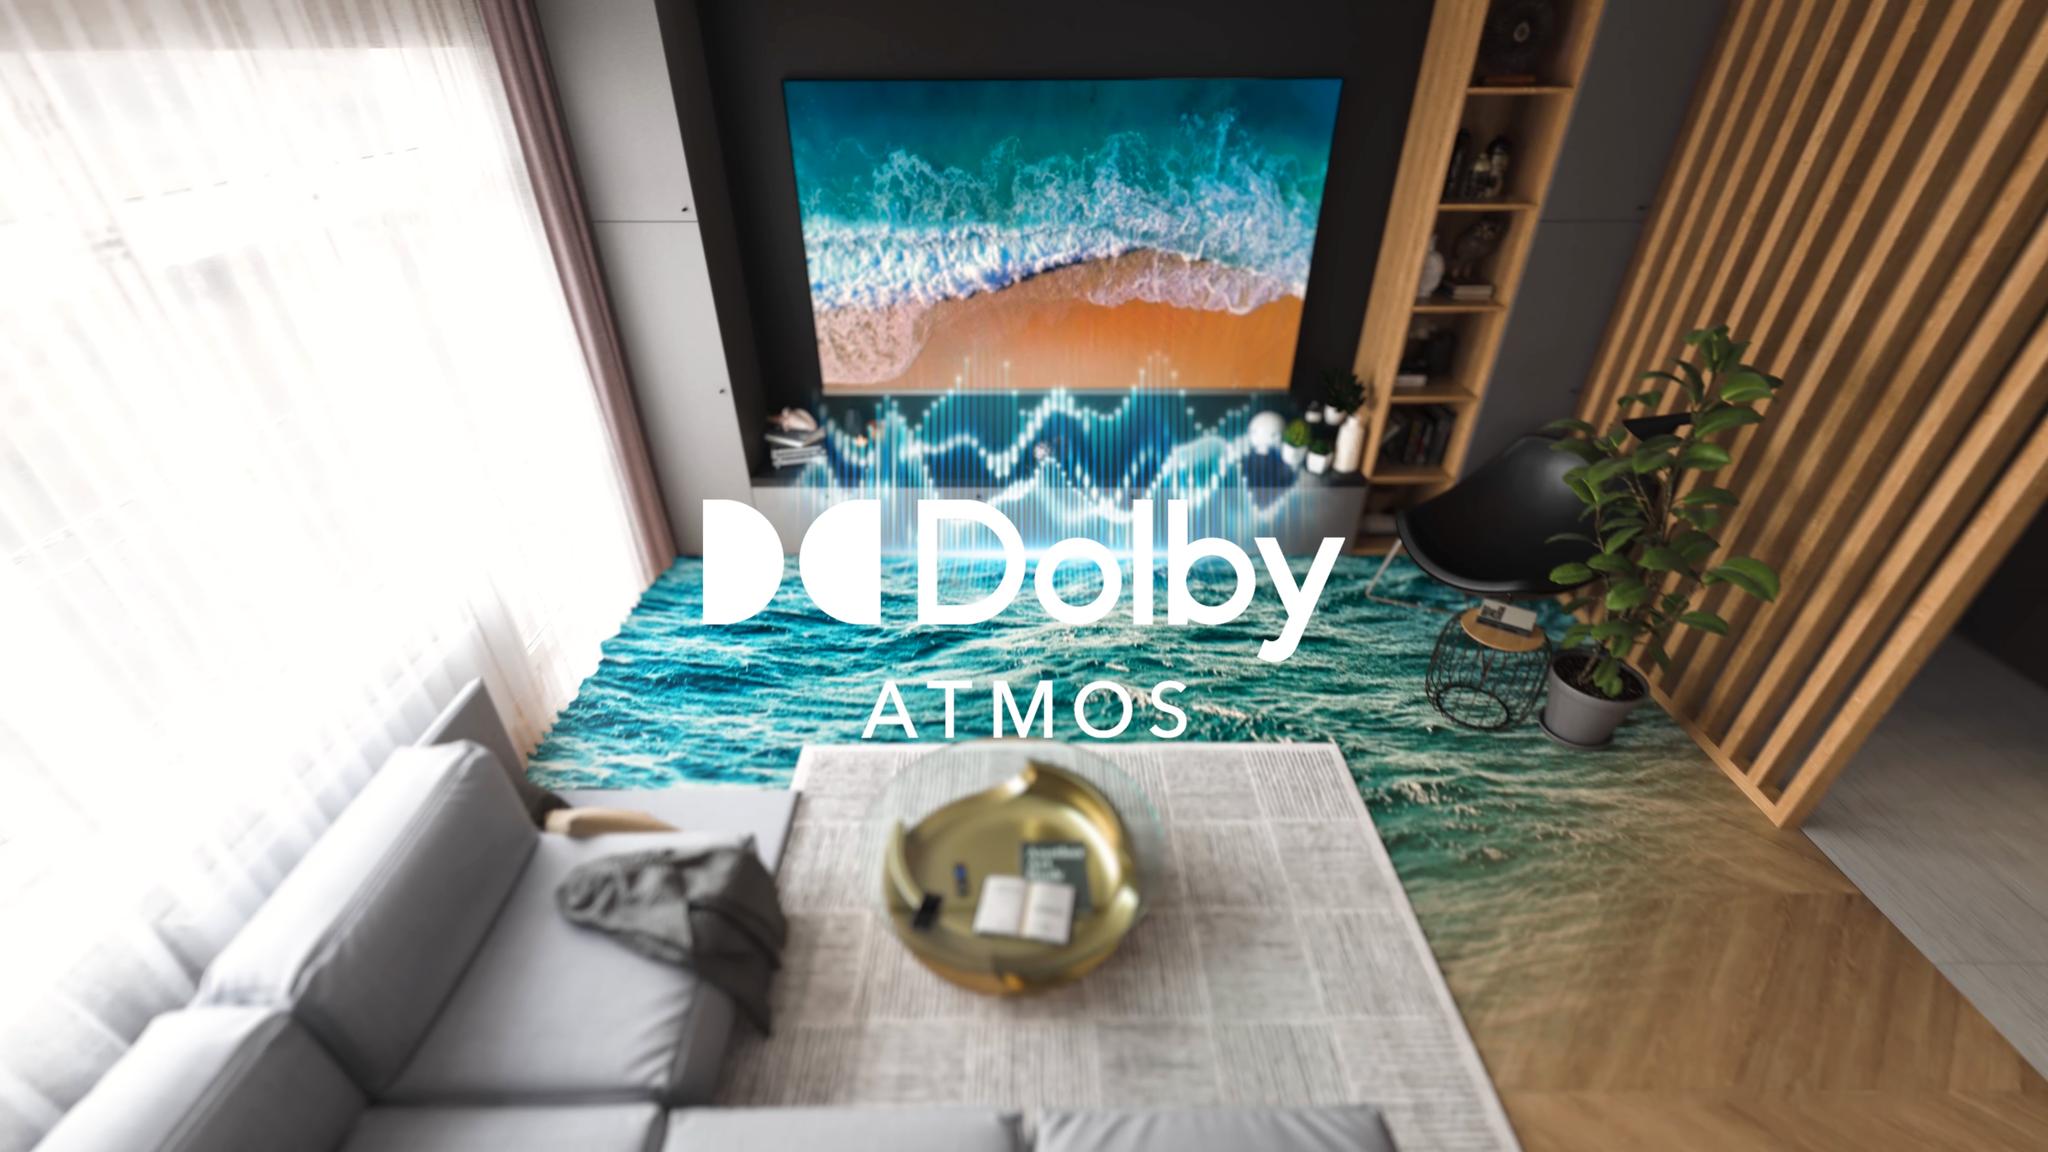 Dolby Atmos: sonido envolvente.